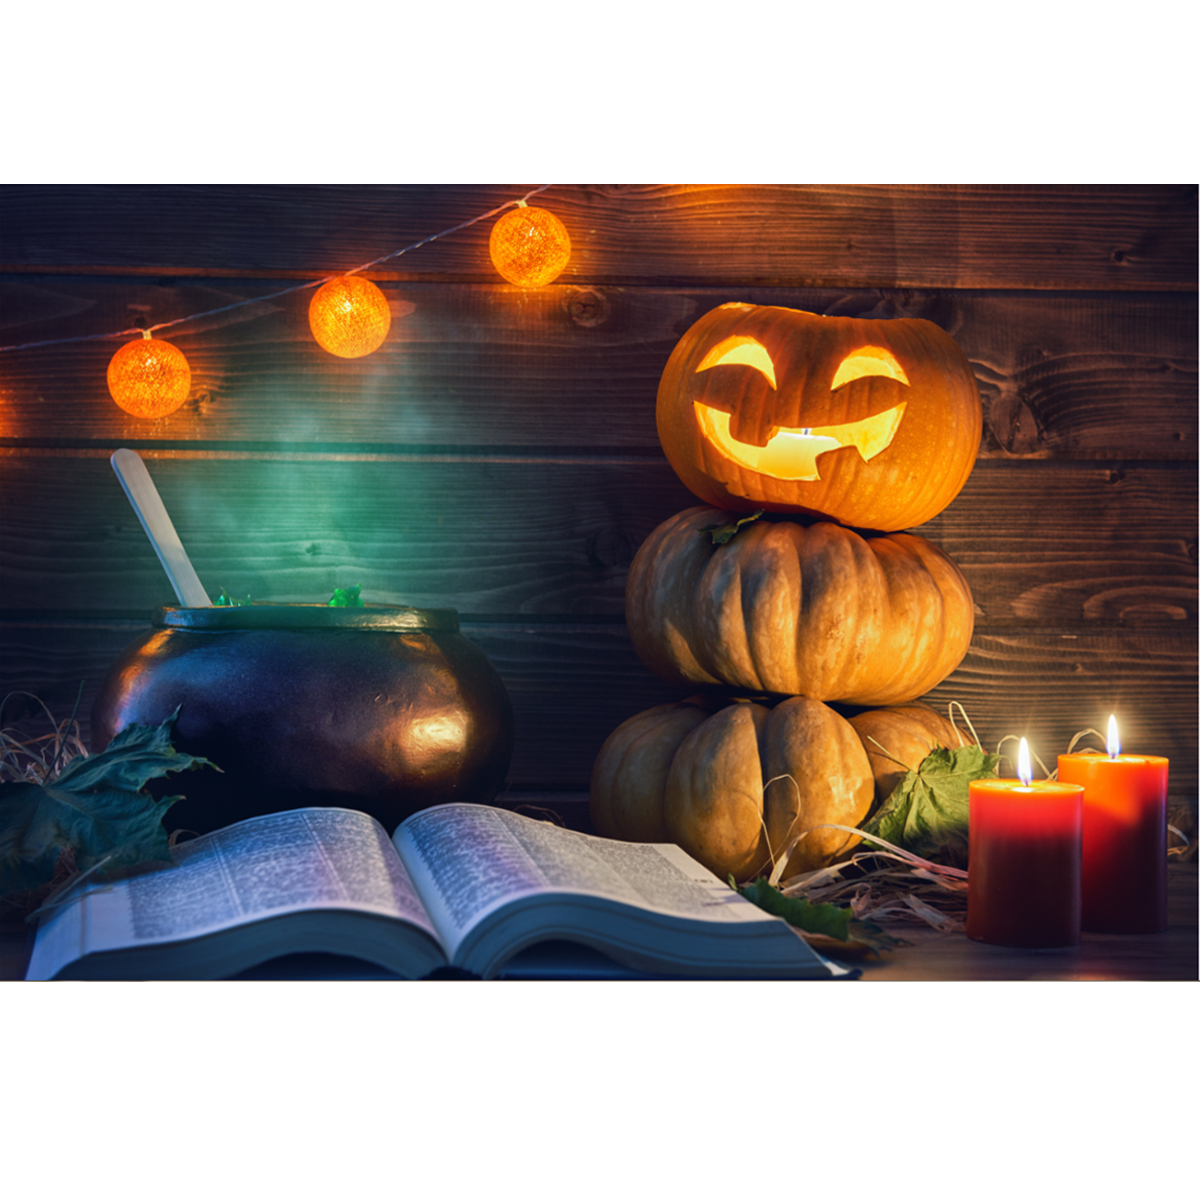 

7x5FT Halloween Pumpkin Lamp Theme Photography Backdrop Studio Prop Background